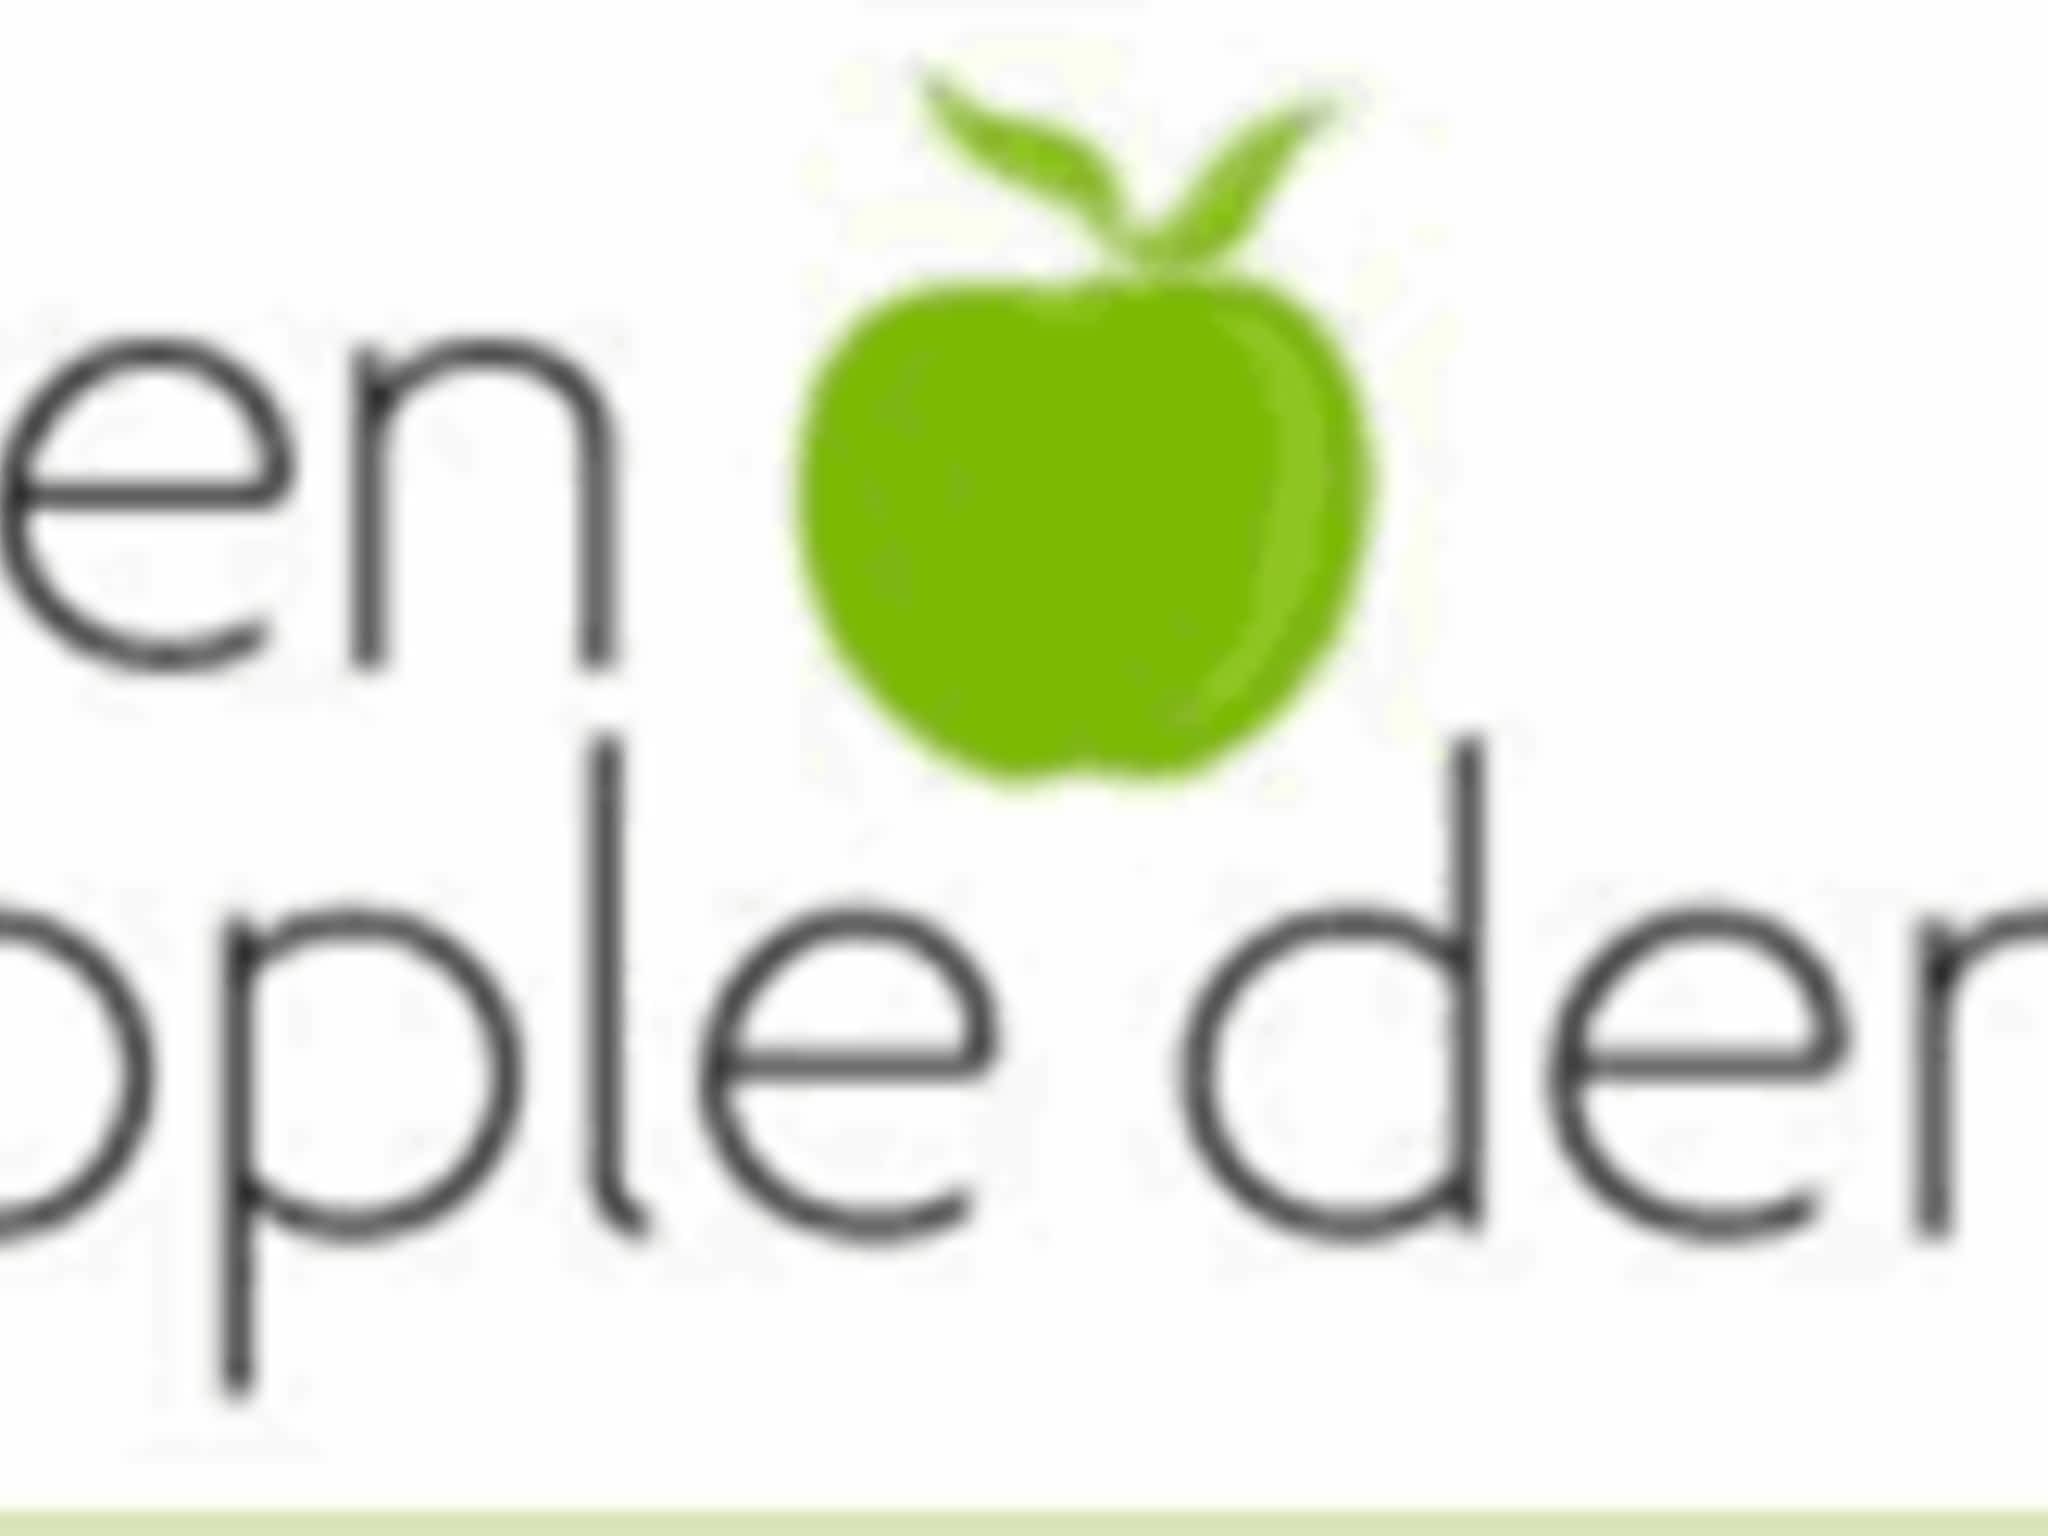 photo Green Apple Dental